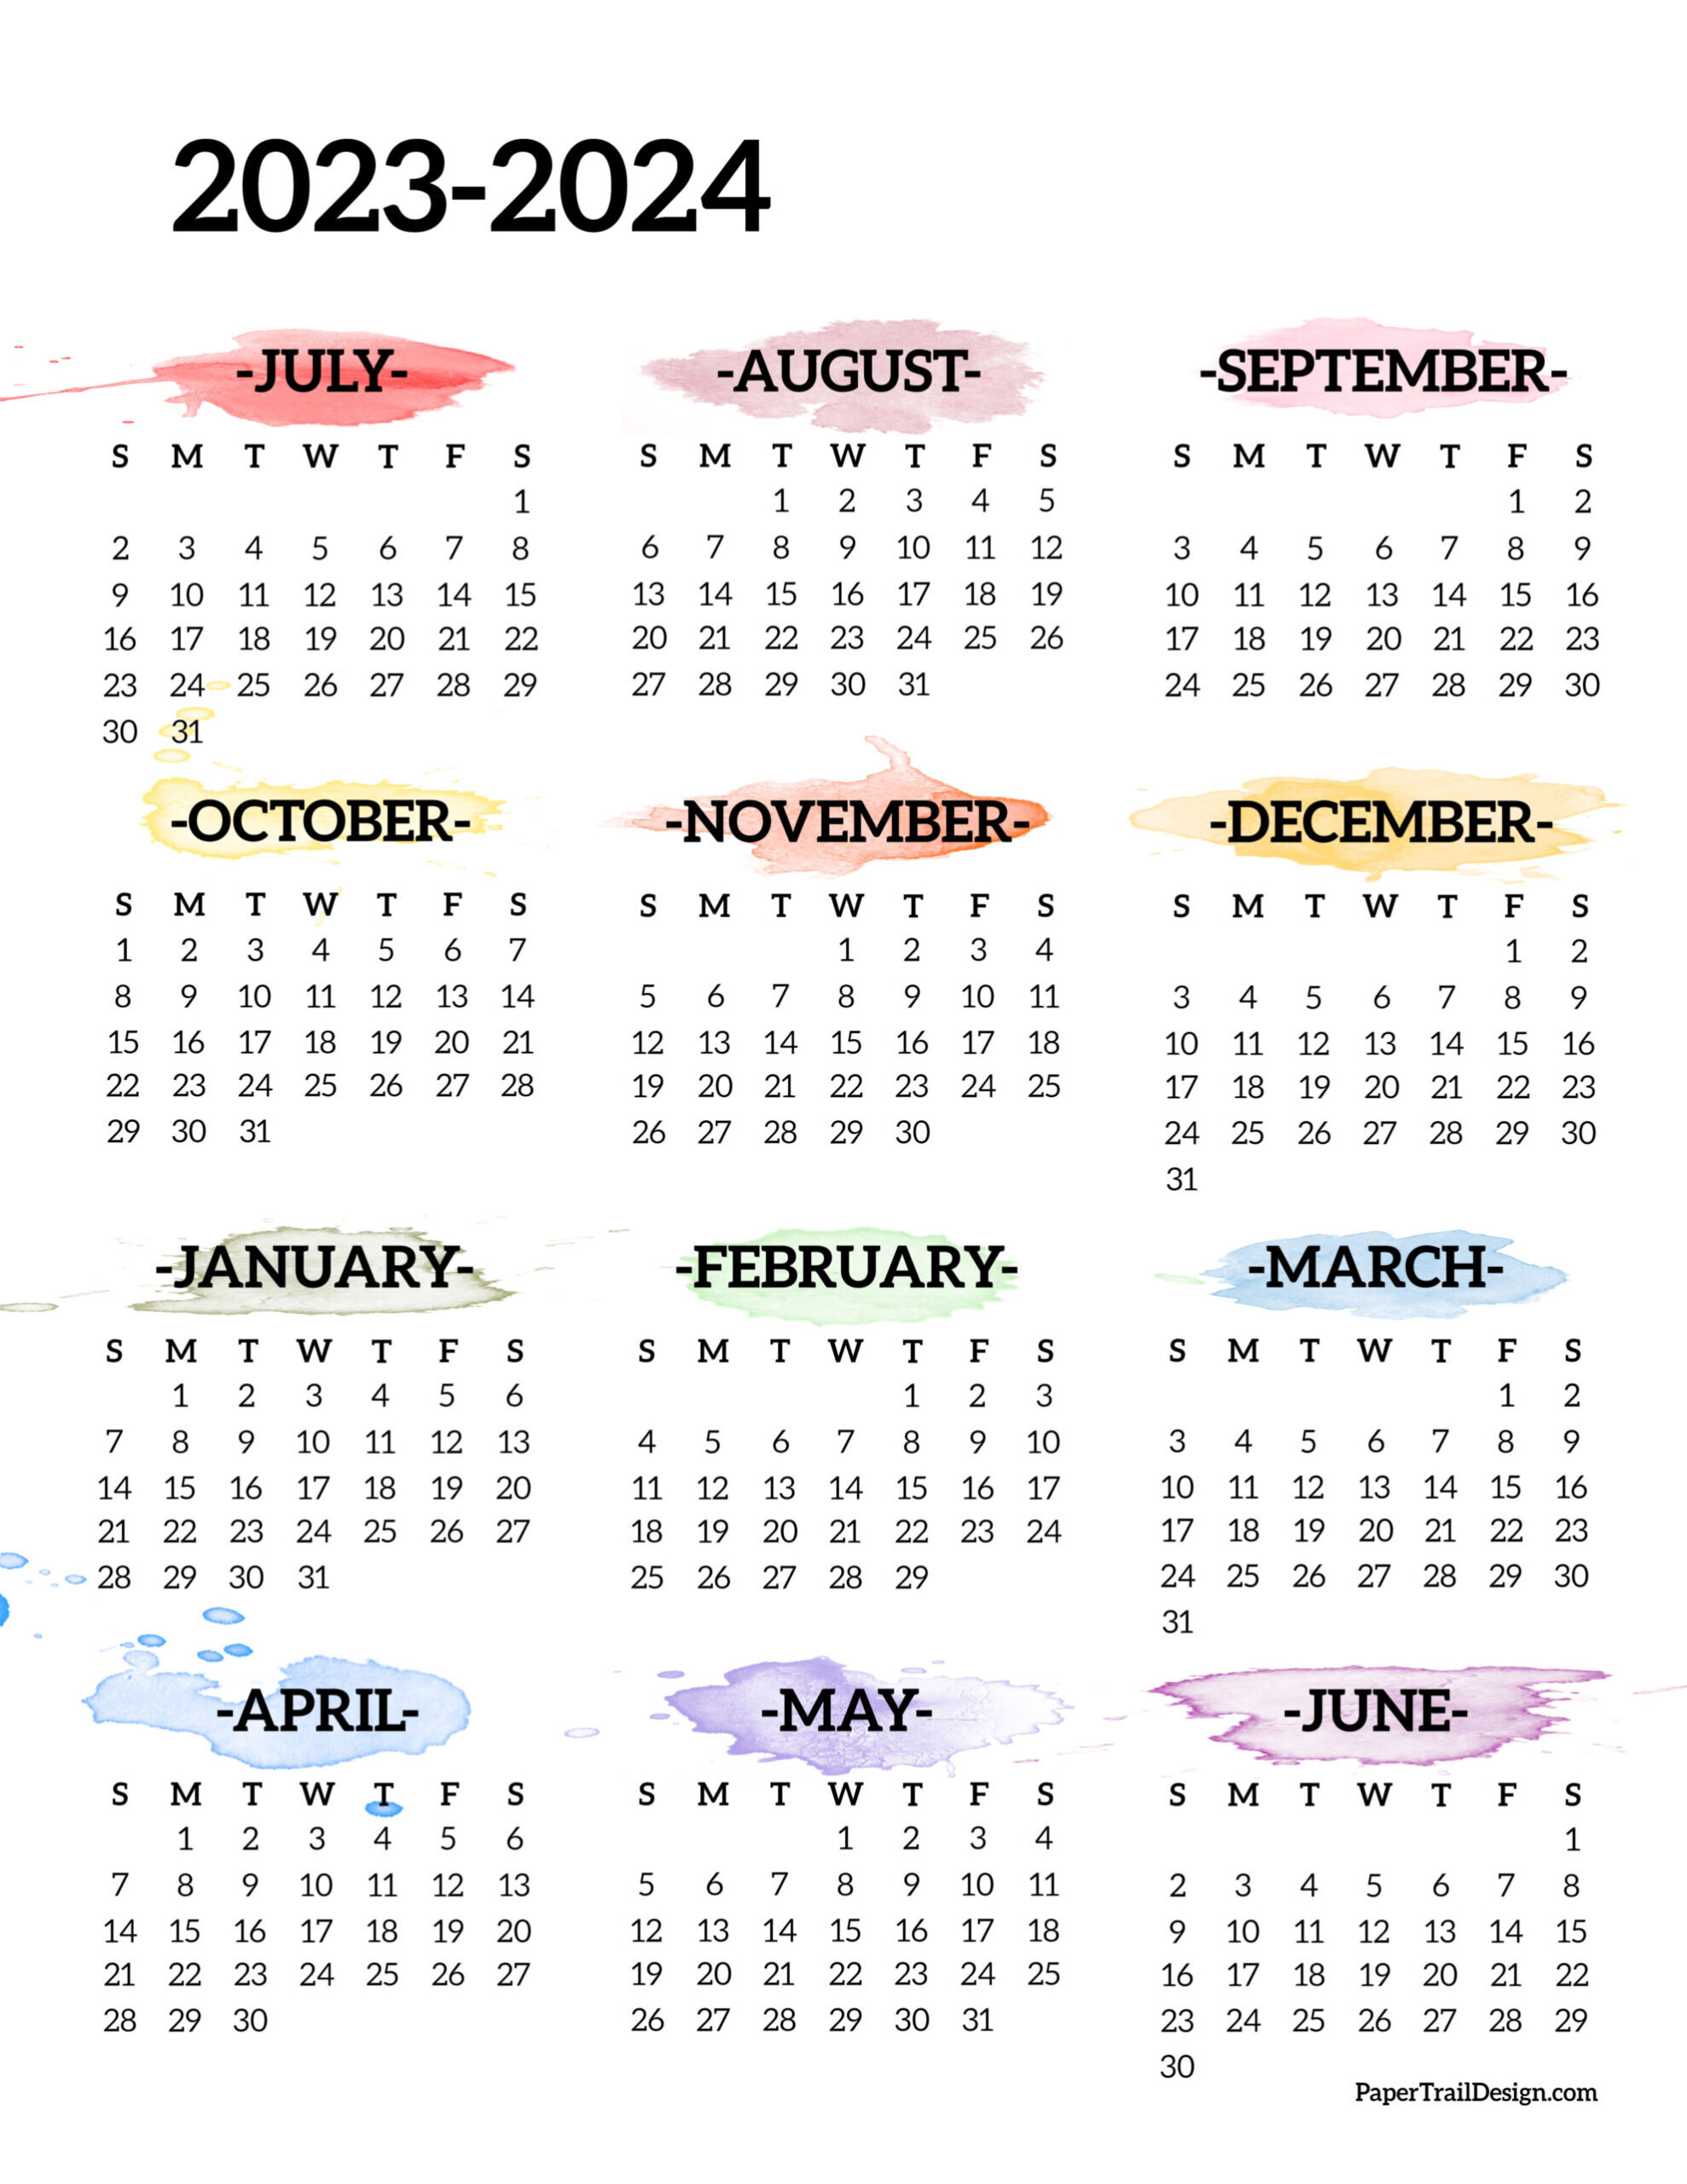 2023-2024 School Year Calendar Free Printable - Paper Trail Design regarding Blank Calendar August 2023 To June 2024